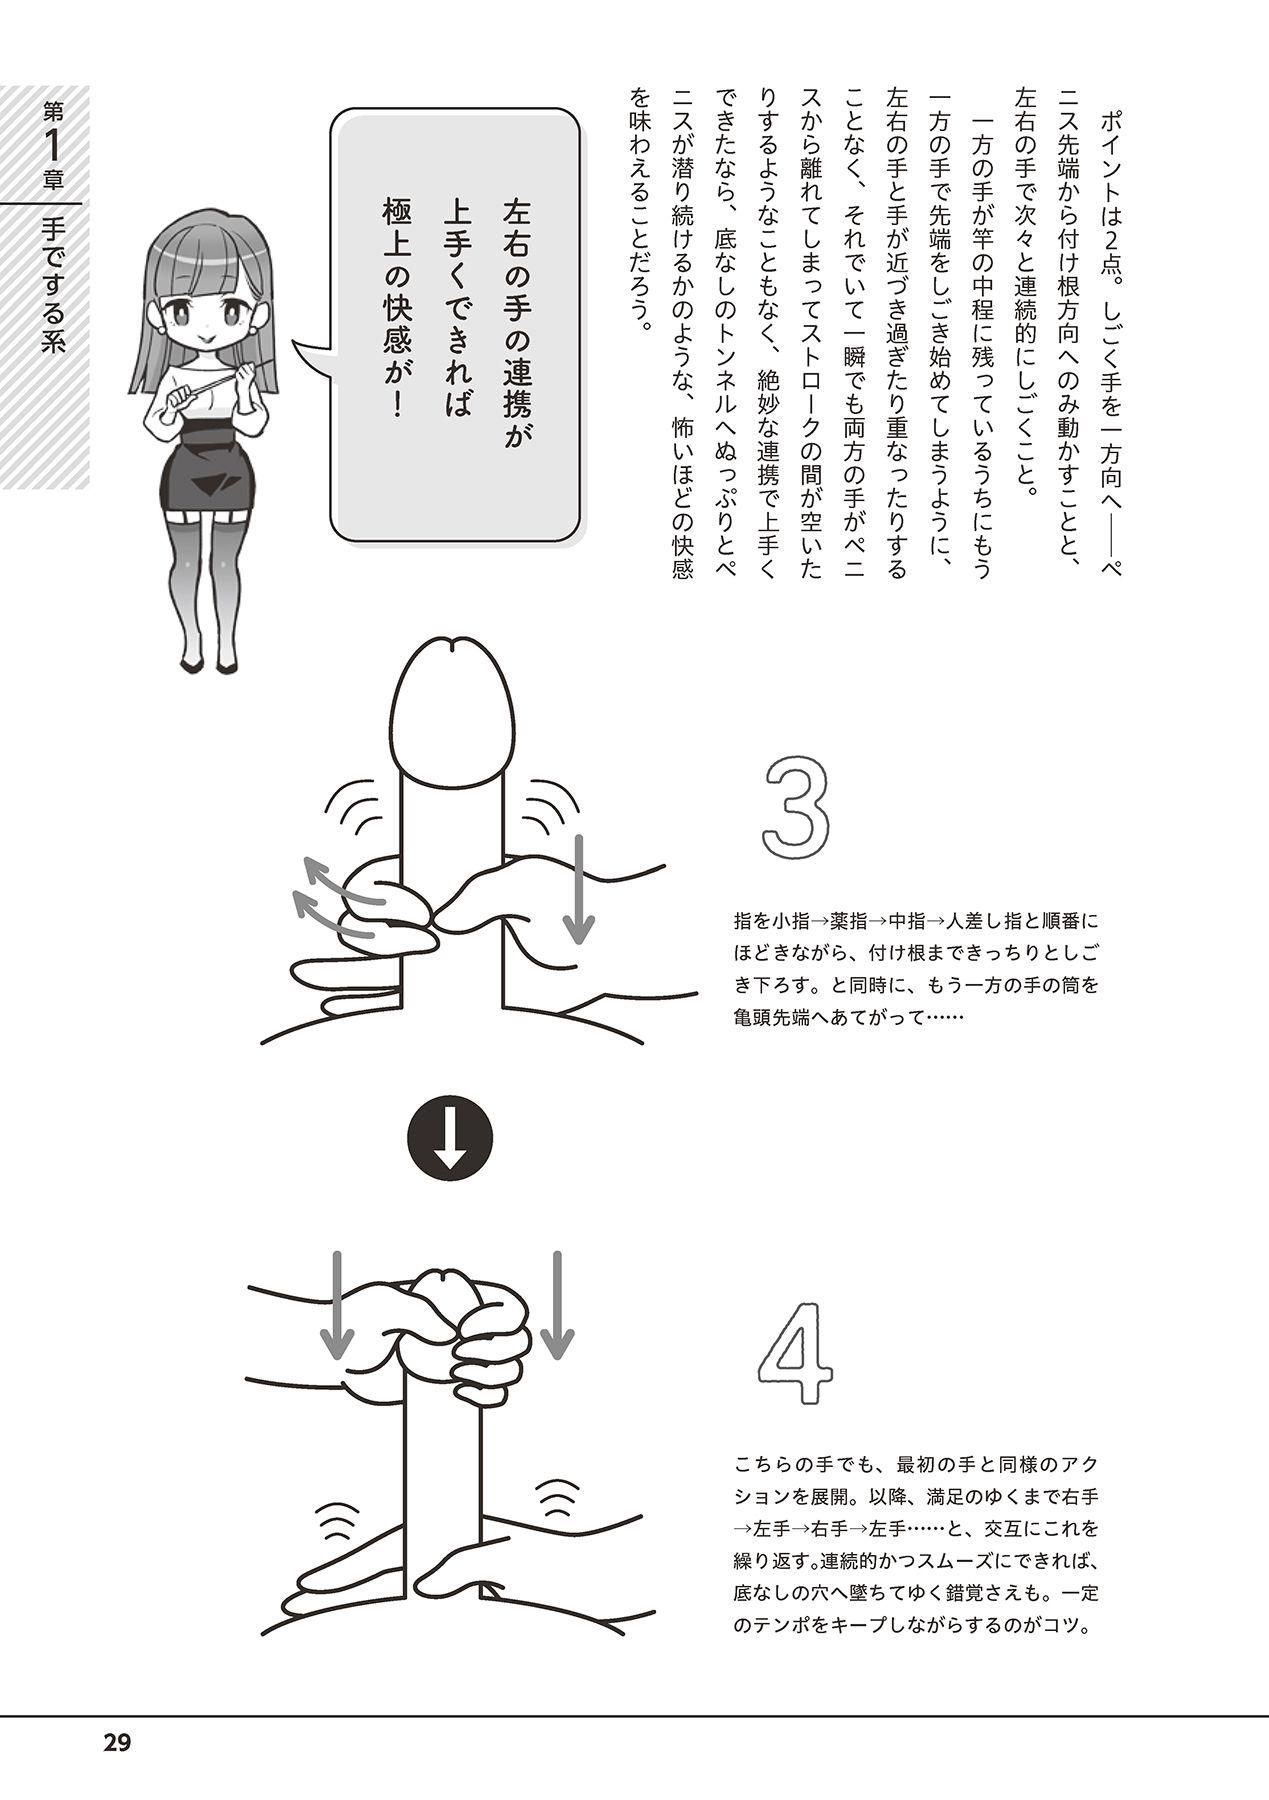 Otoko no Jii Onanie Kanzen Manual Illustration Han...... Onanie Play 30